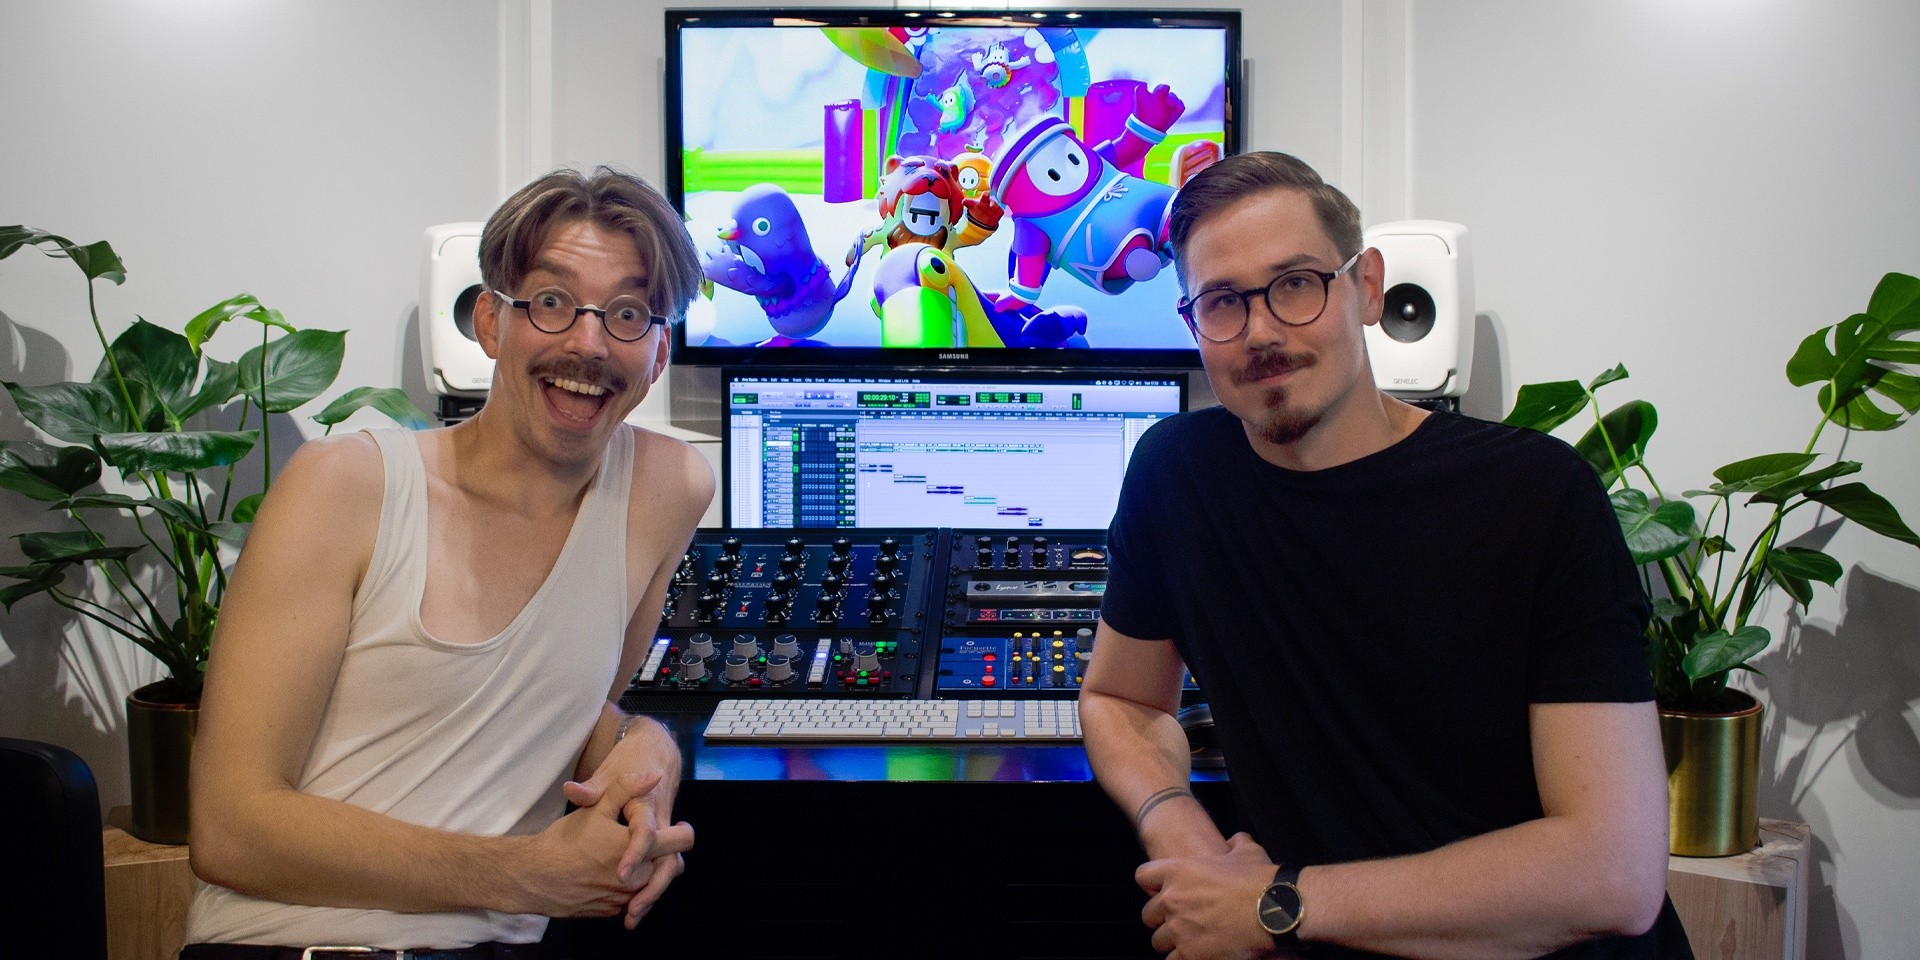 Daniel Hagström and Jukio Kallio talk about the creation of the Fall Guys soundtrack